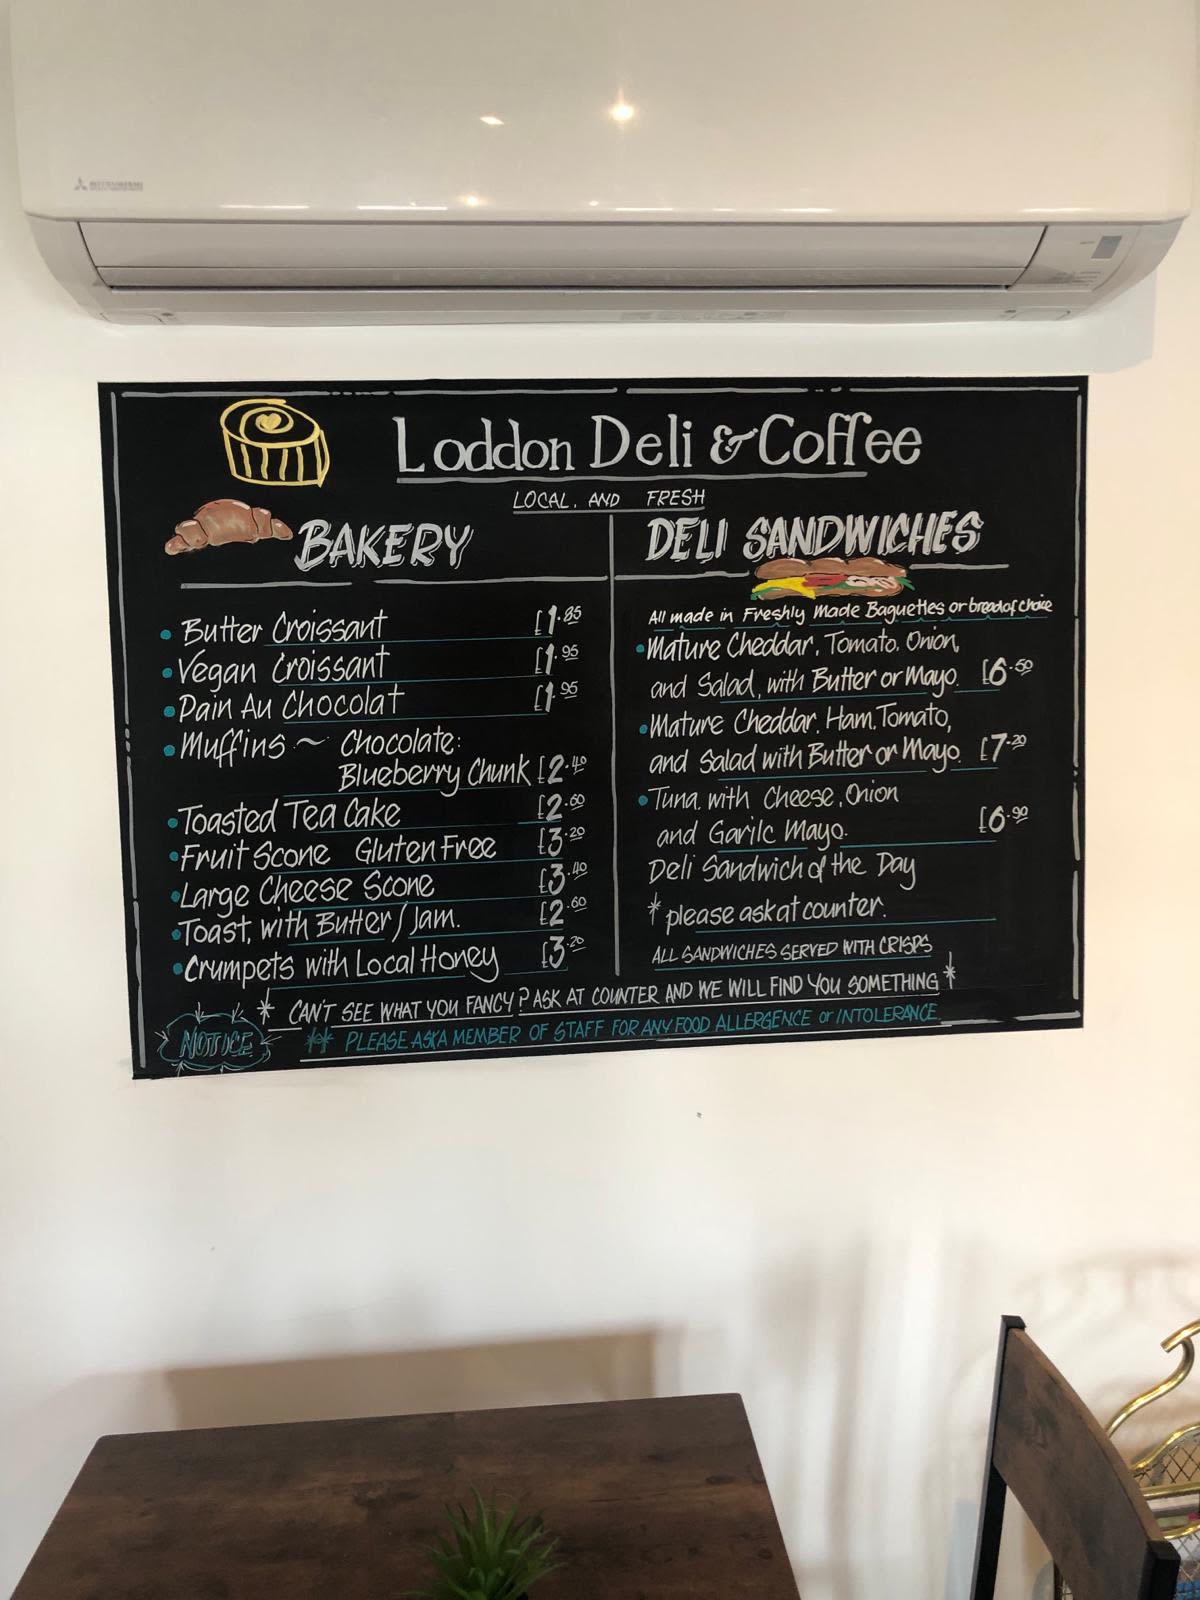 Images Loddon Deli and Coffee Ltd